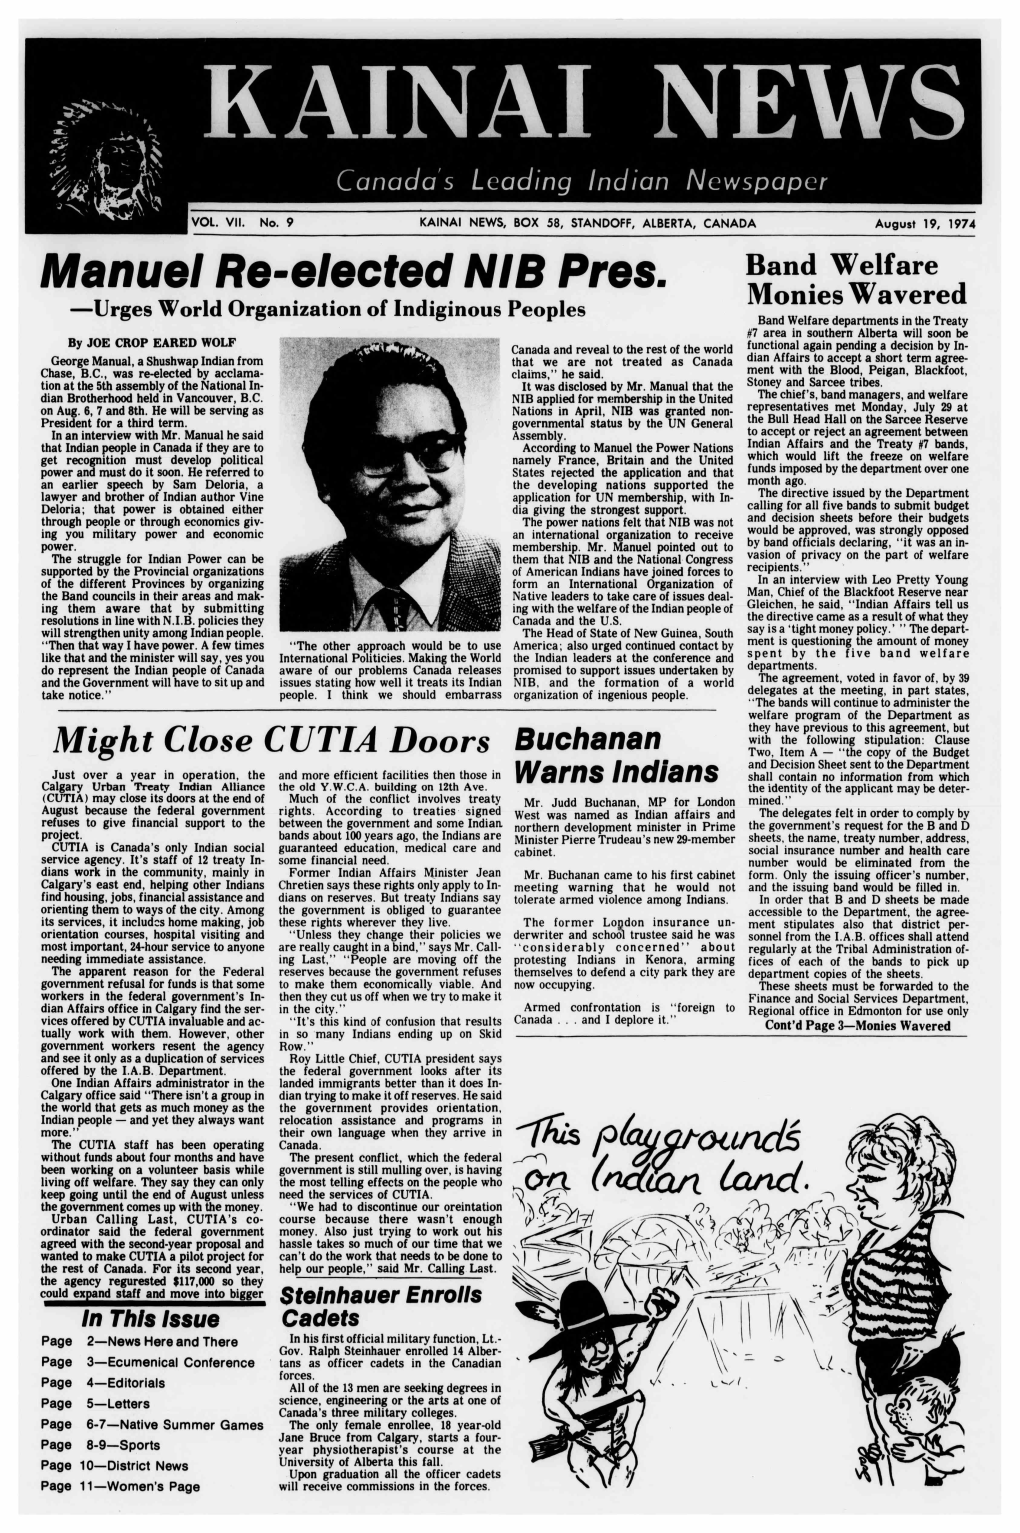 Manuel Re-Elected NIB Pres